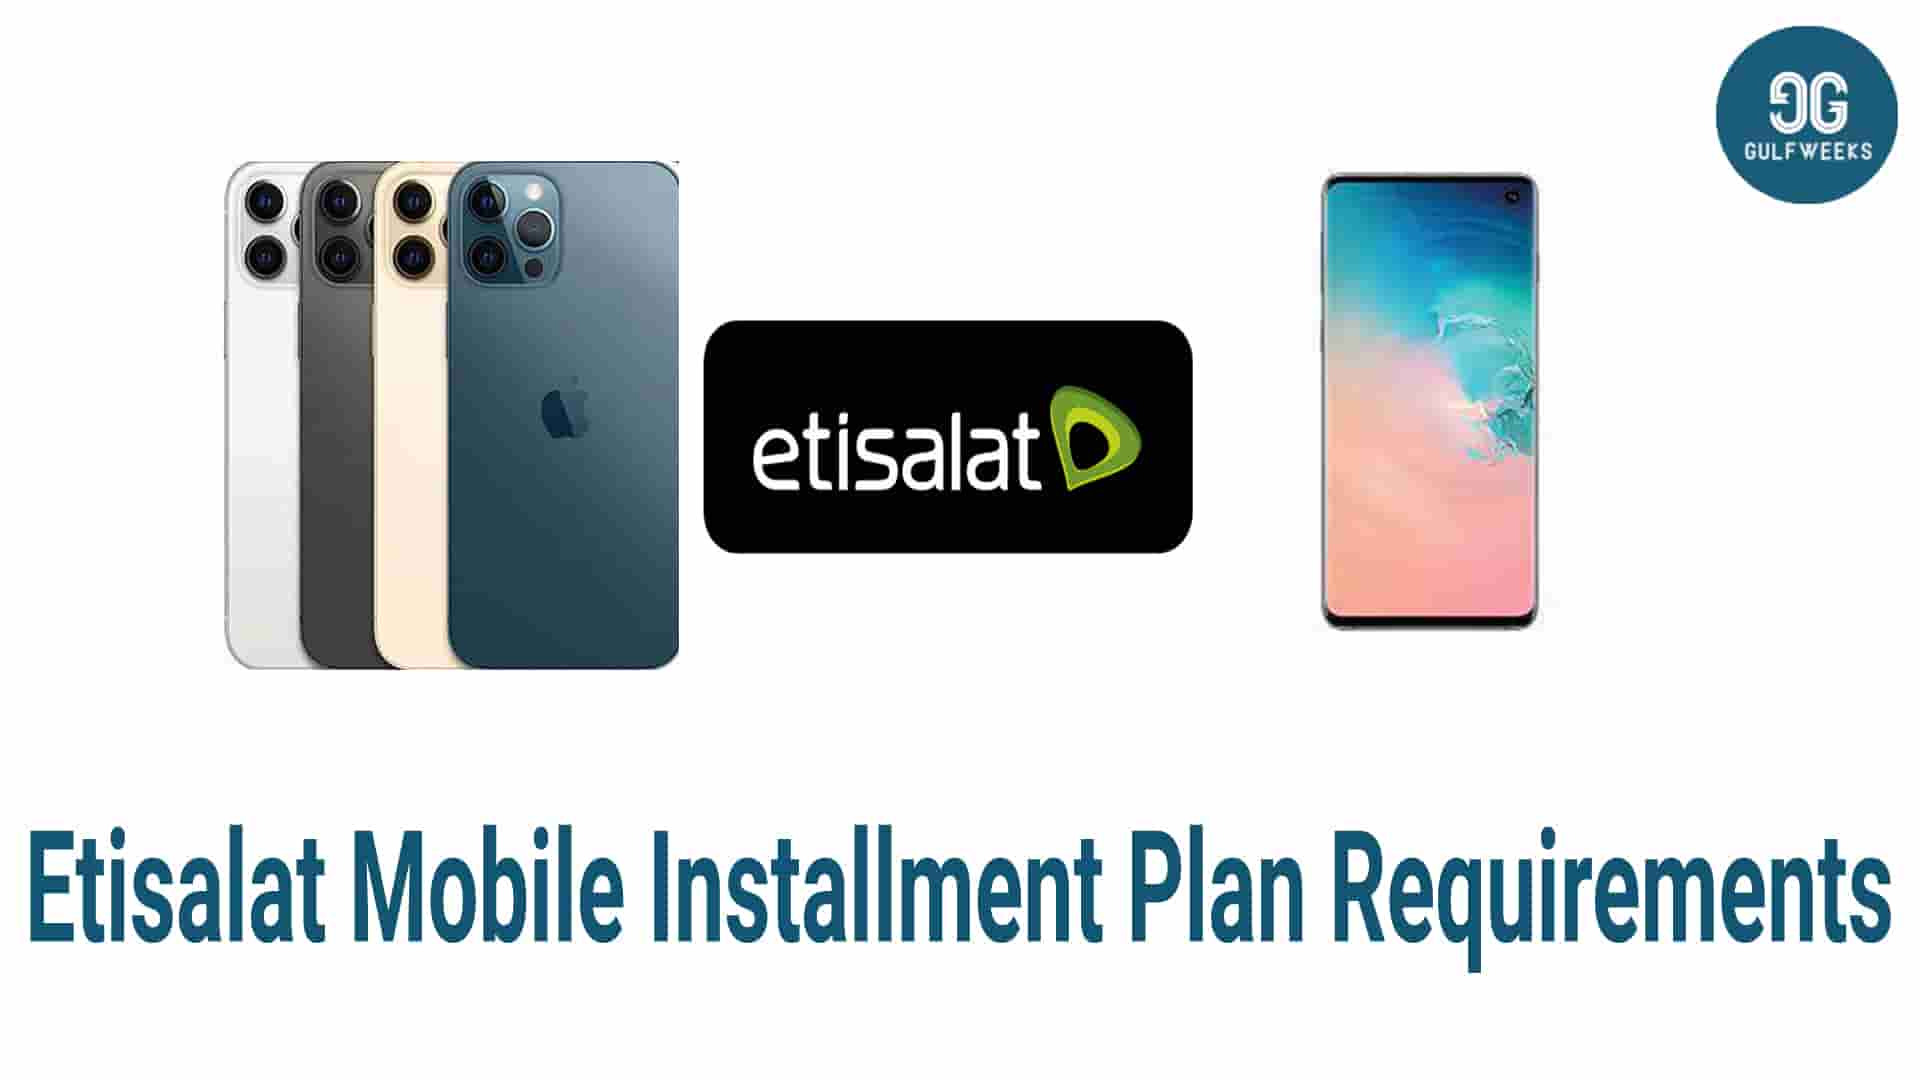 Etisalat Mobile Installment Plan Requirements